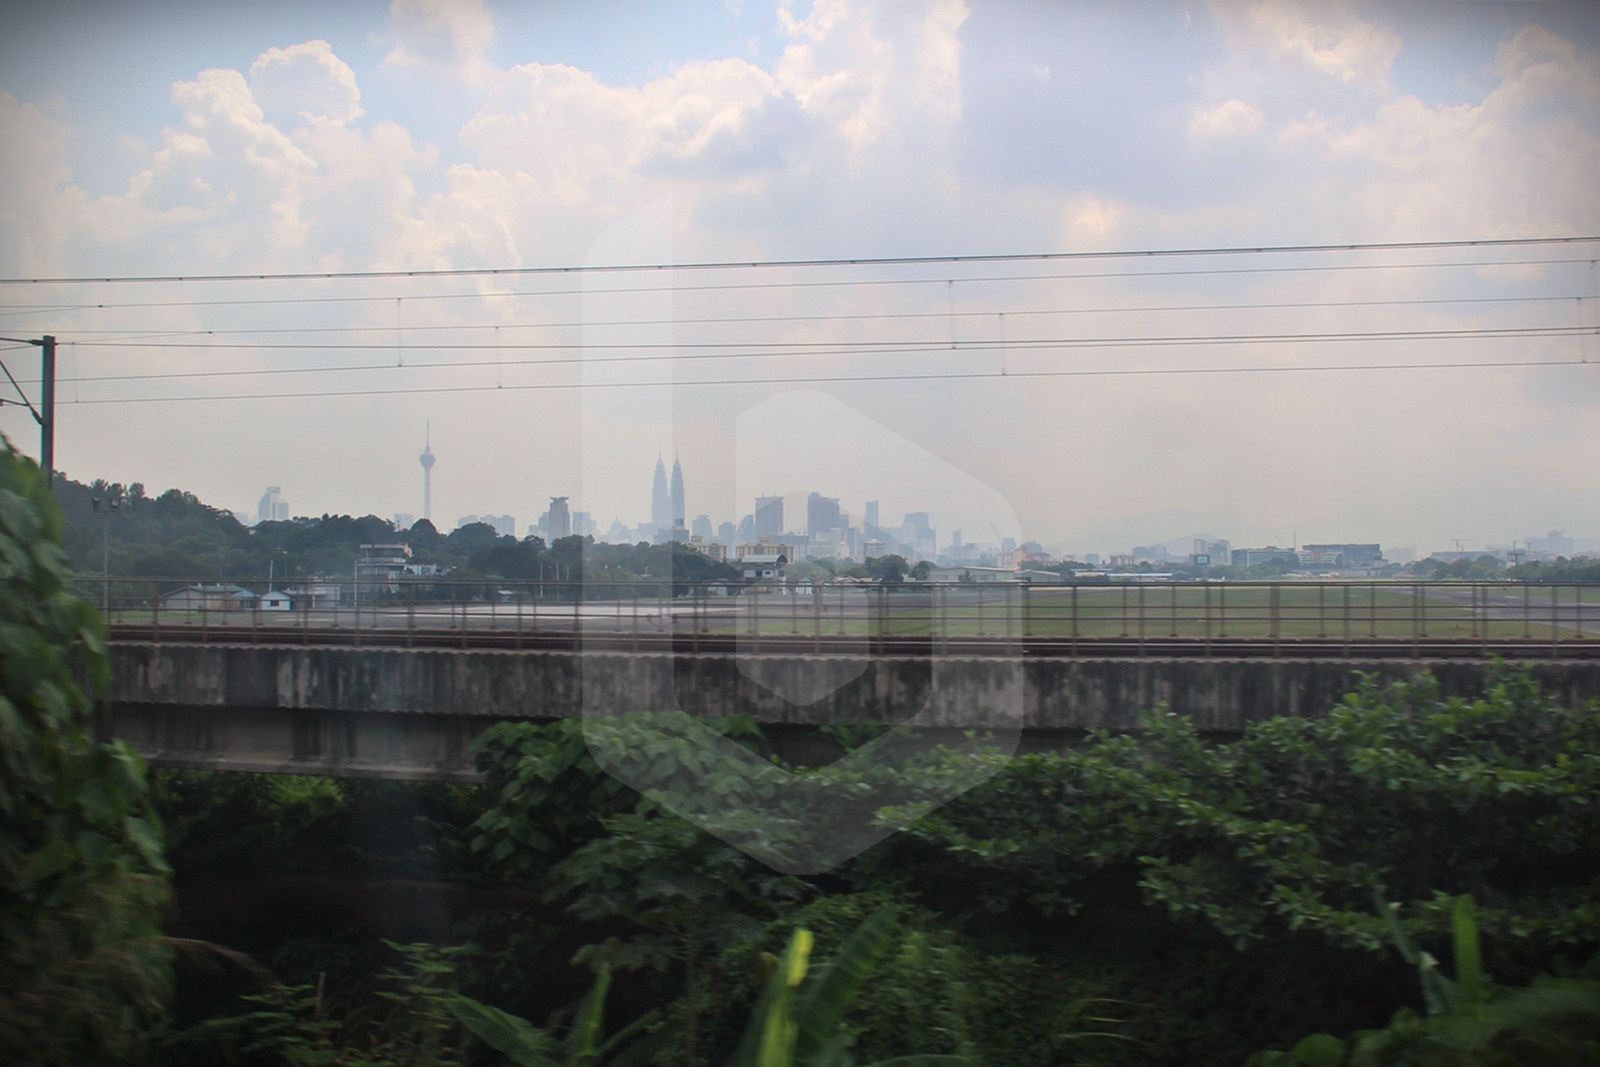 Kuala Lumpur to Gemas by train